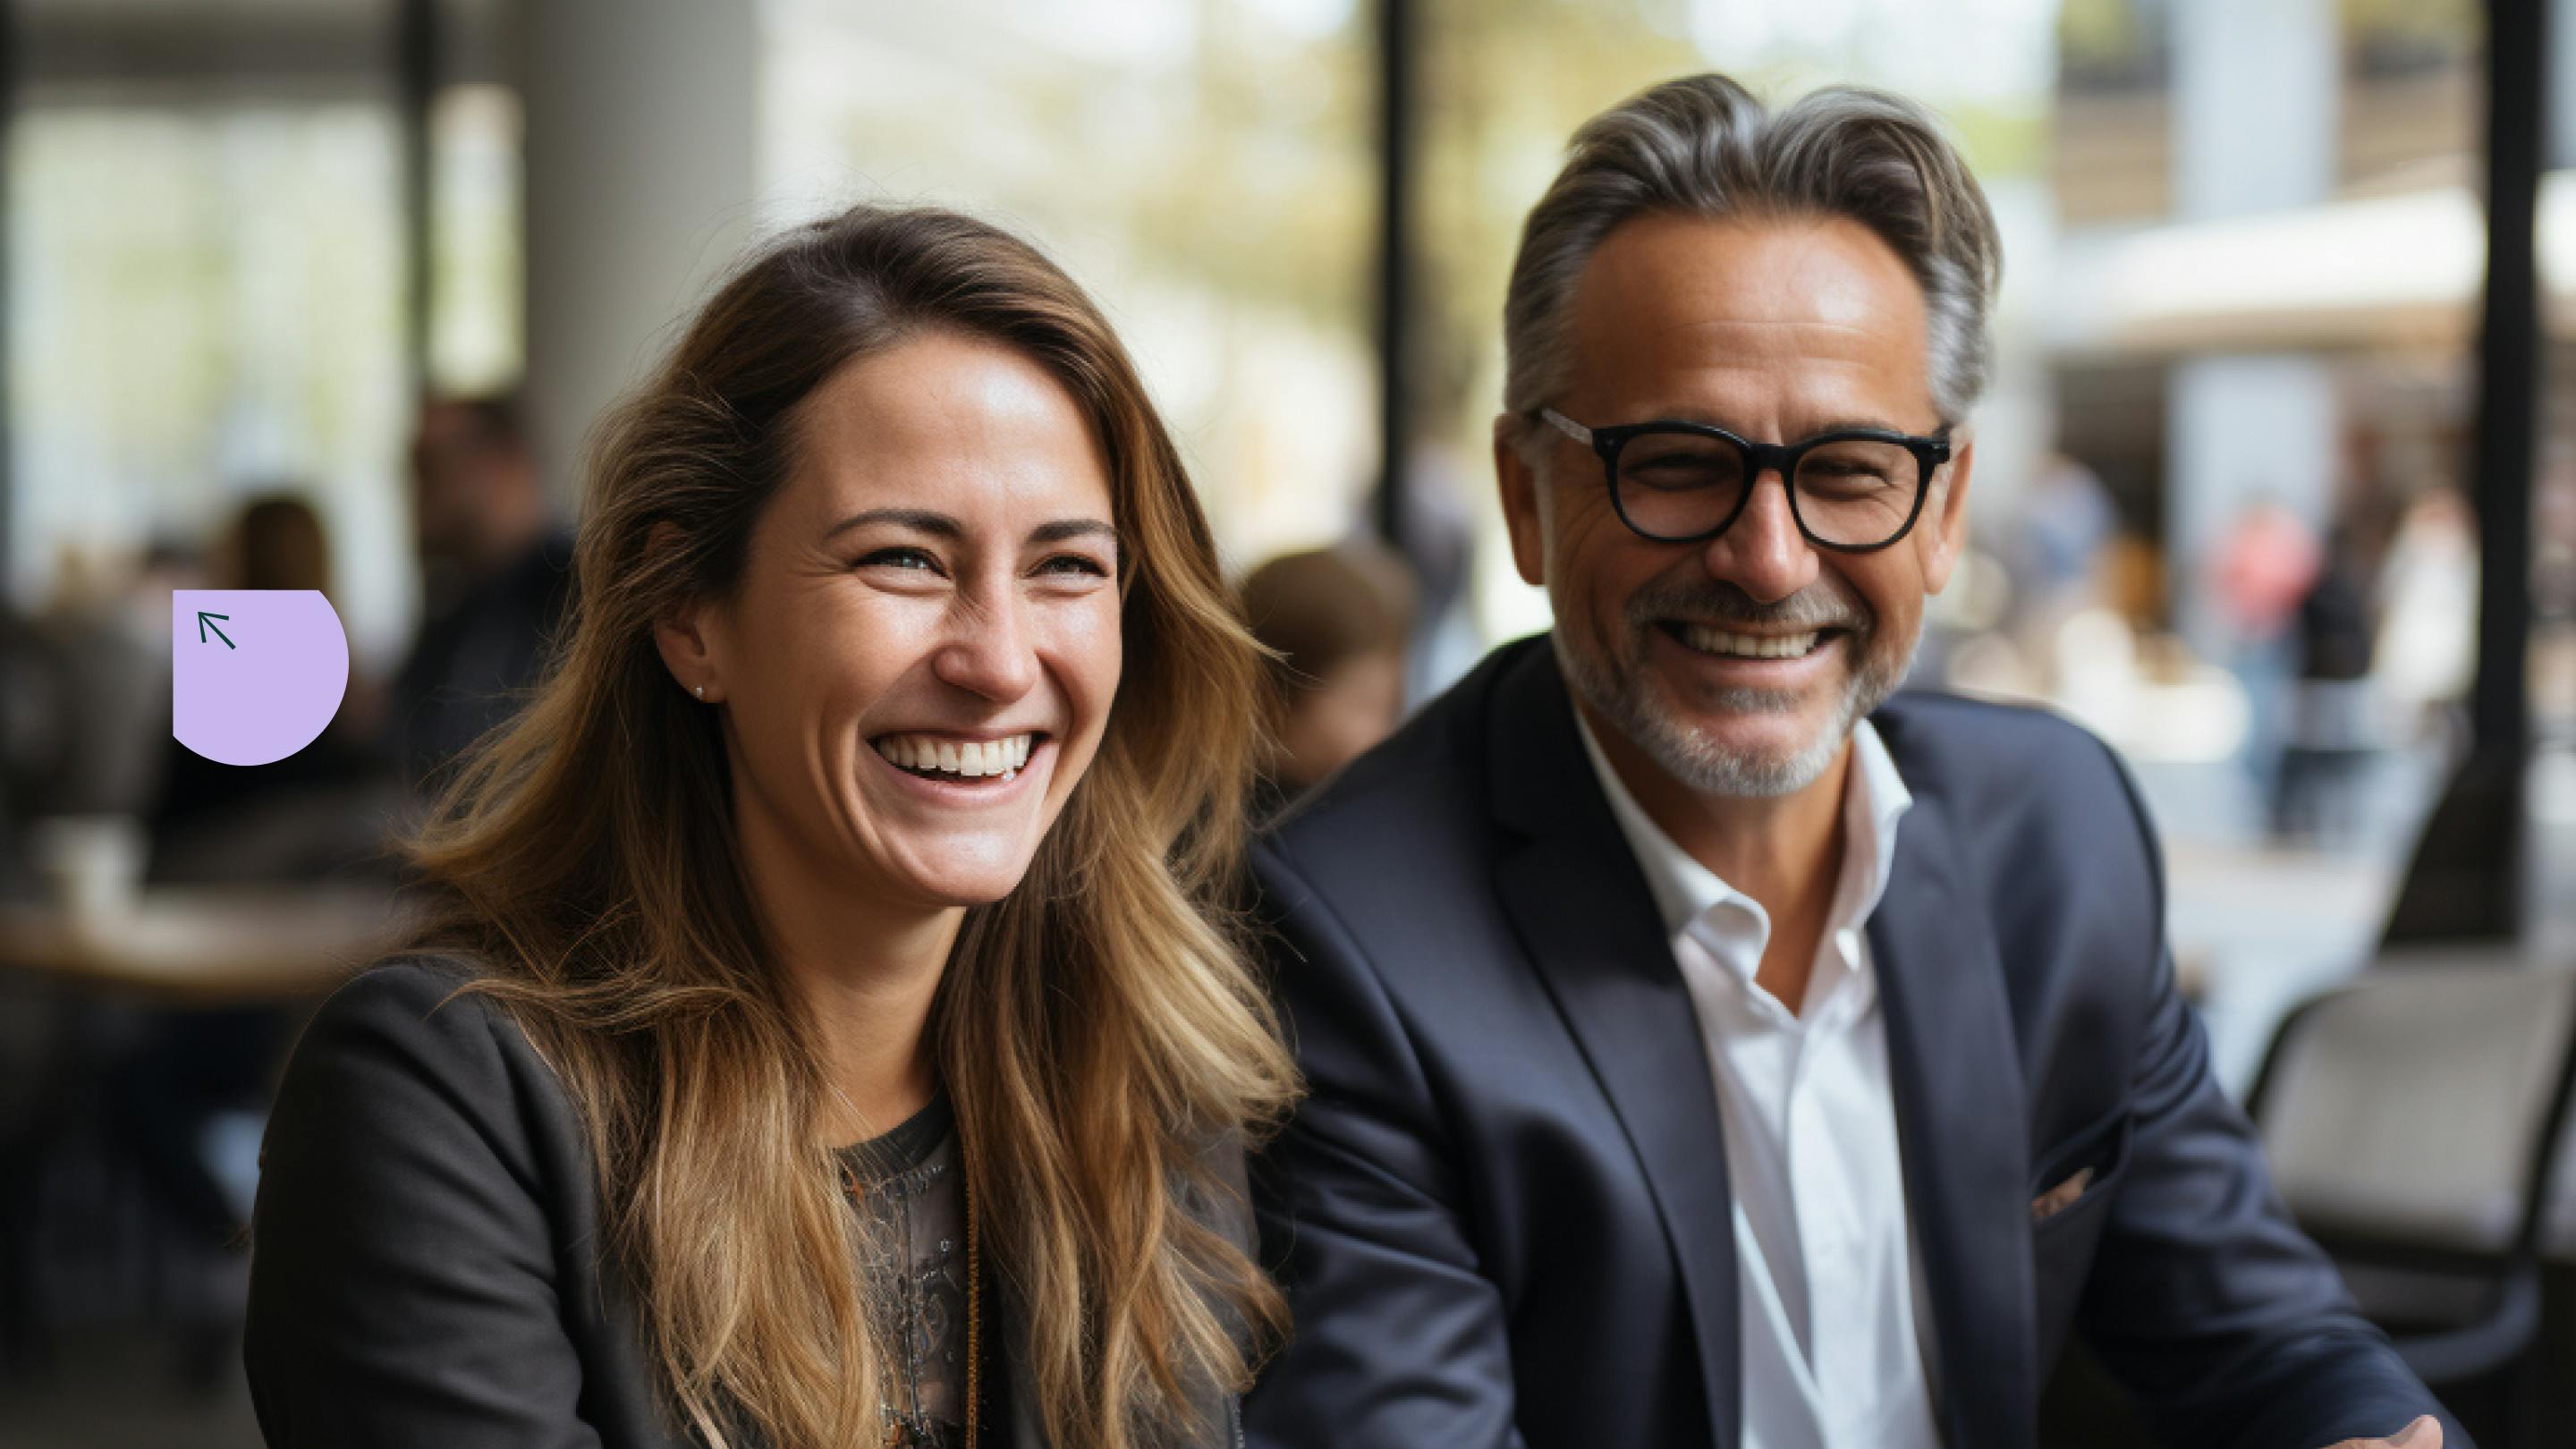 &why: Breffka & Hehnke - Case Branding Website Man and Woman smiling